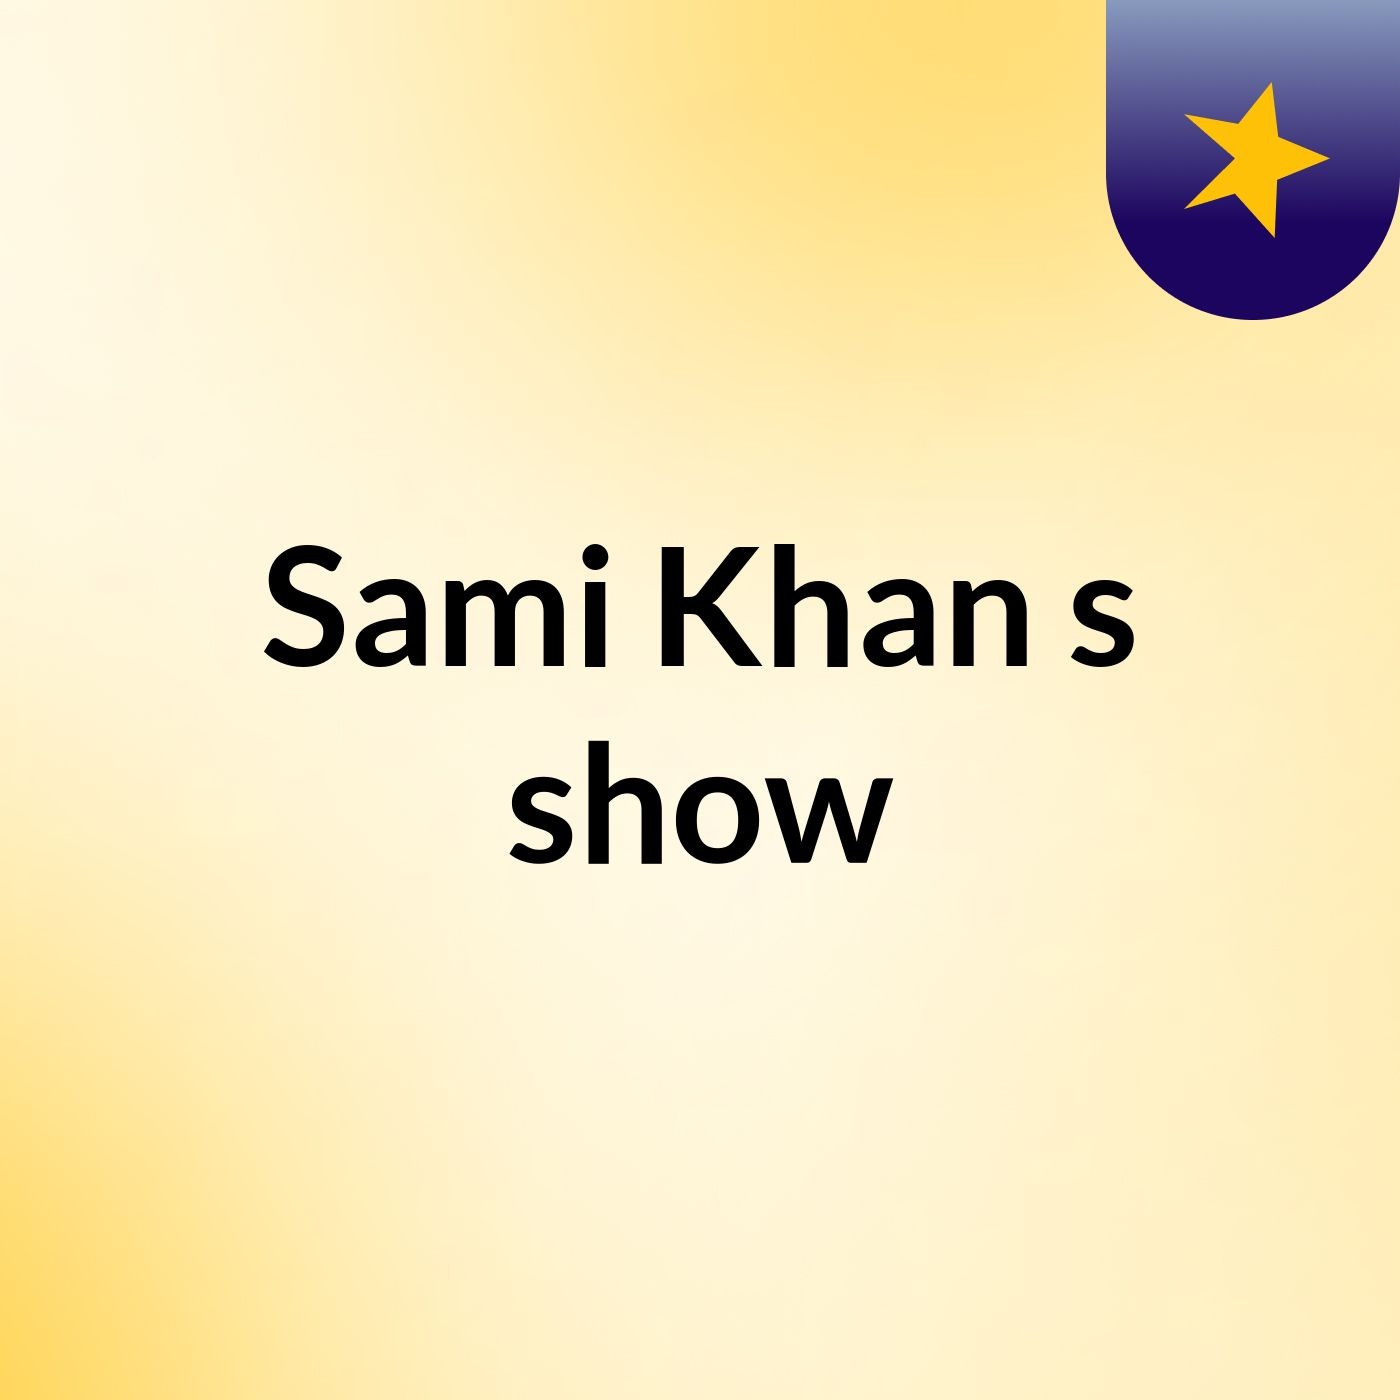 Sami Khan's show